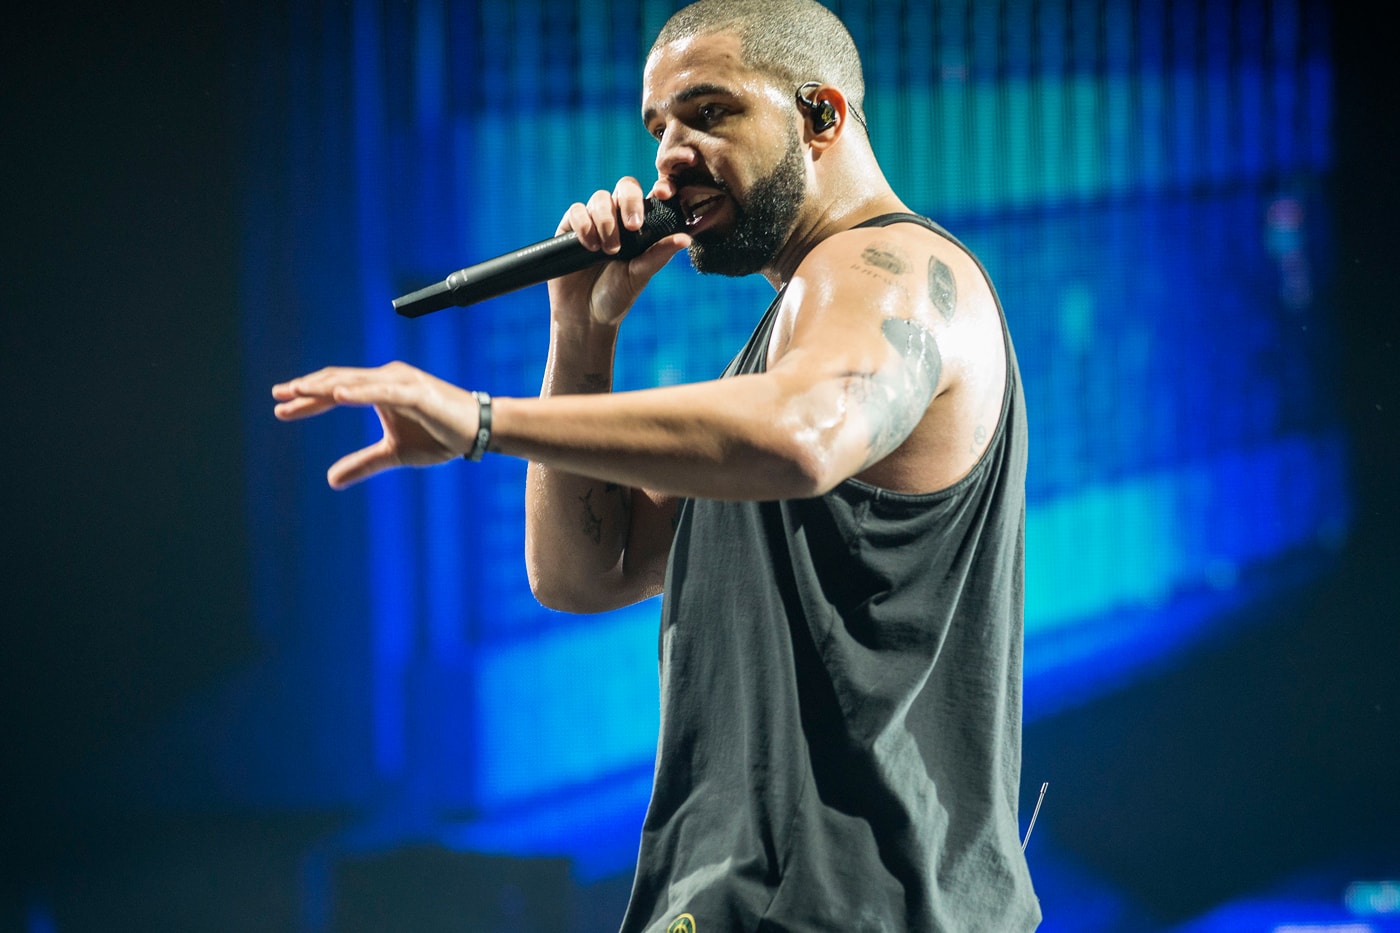 Watch Drake's "Hotline Bling" Parody Commercial for Super Bowl Sunday